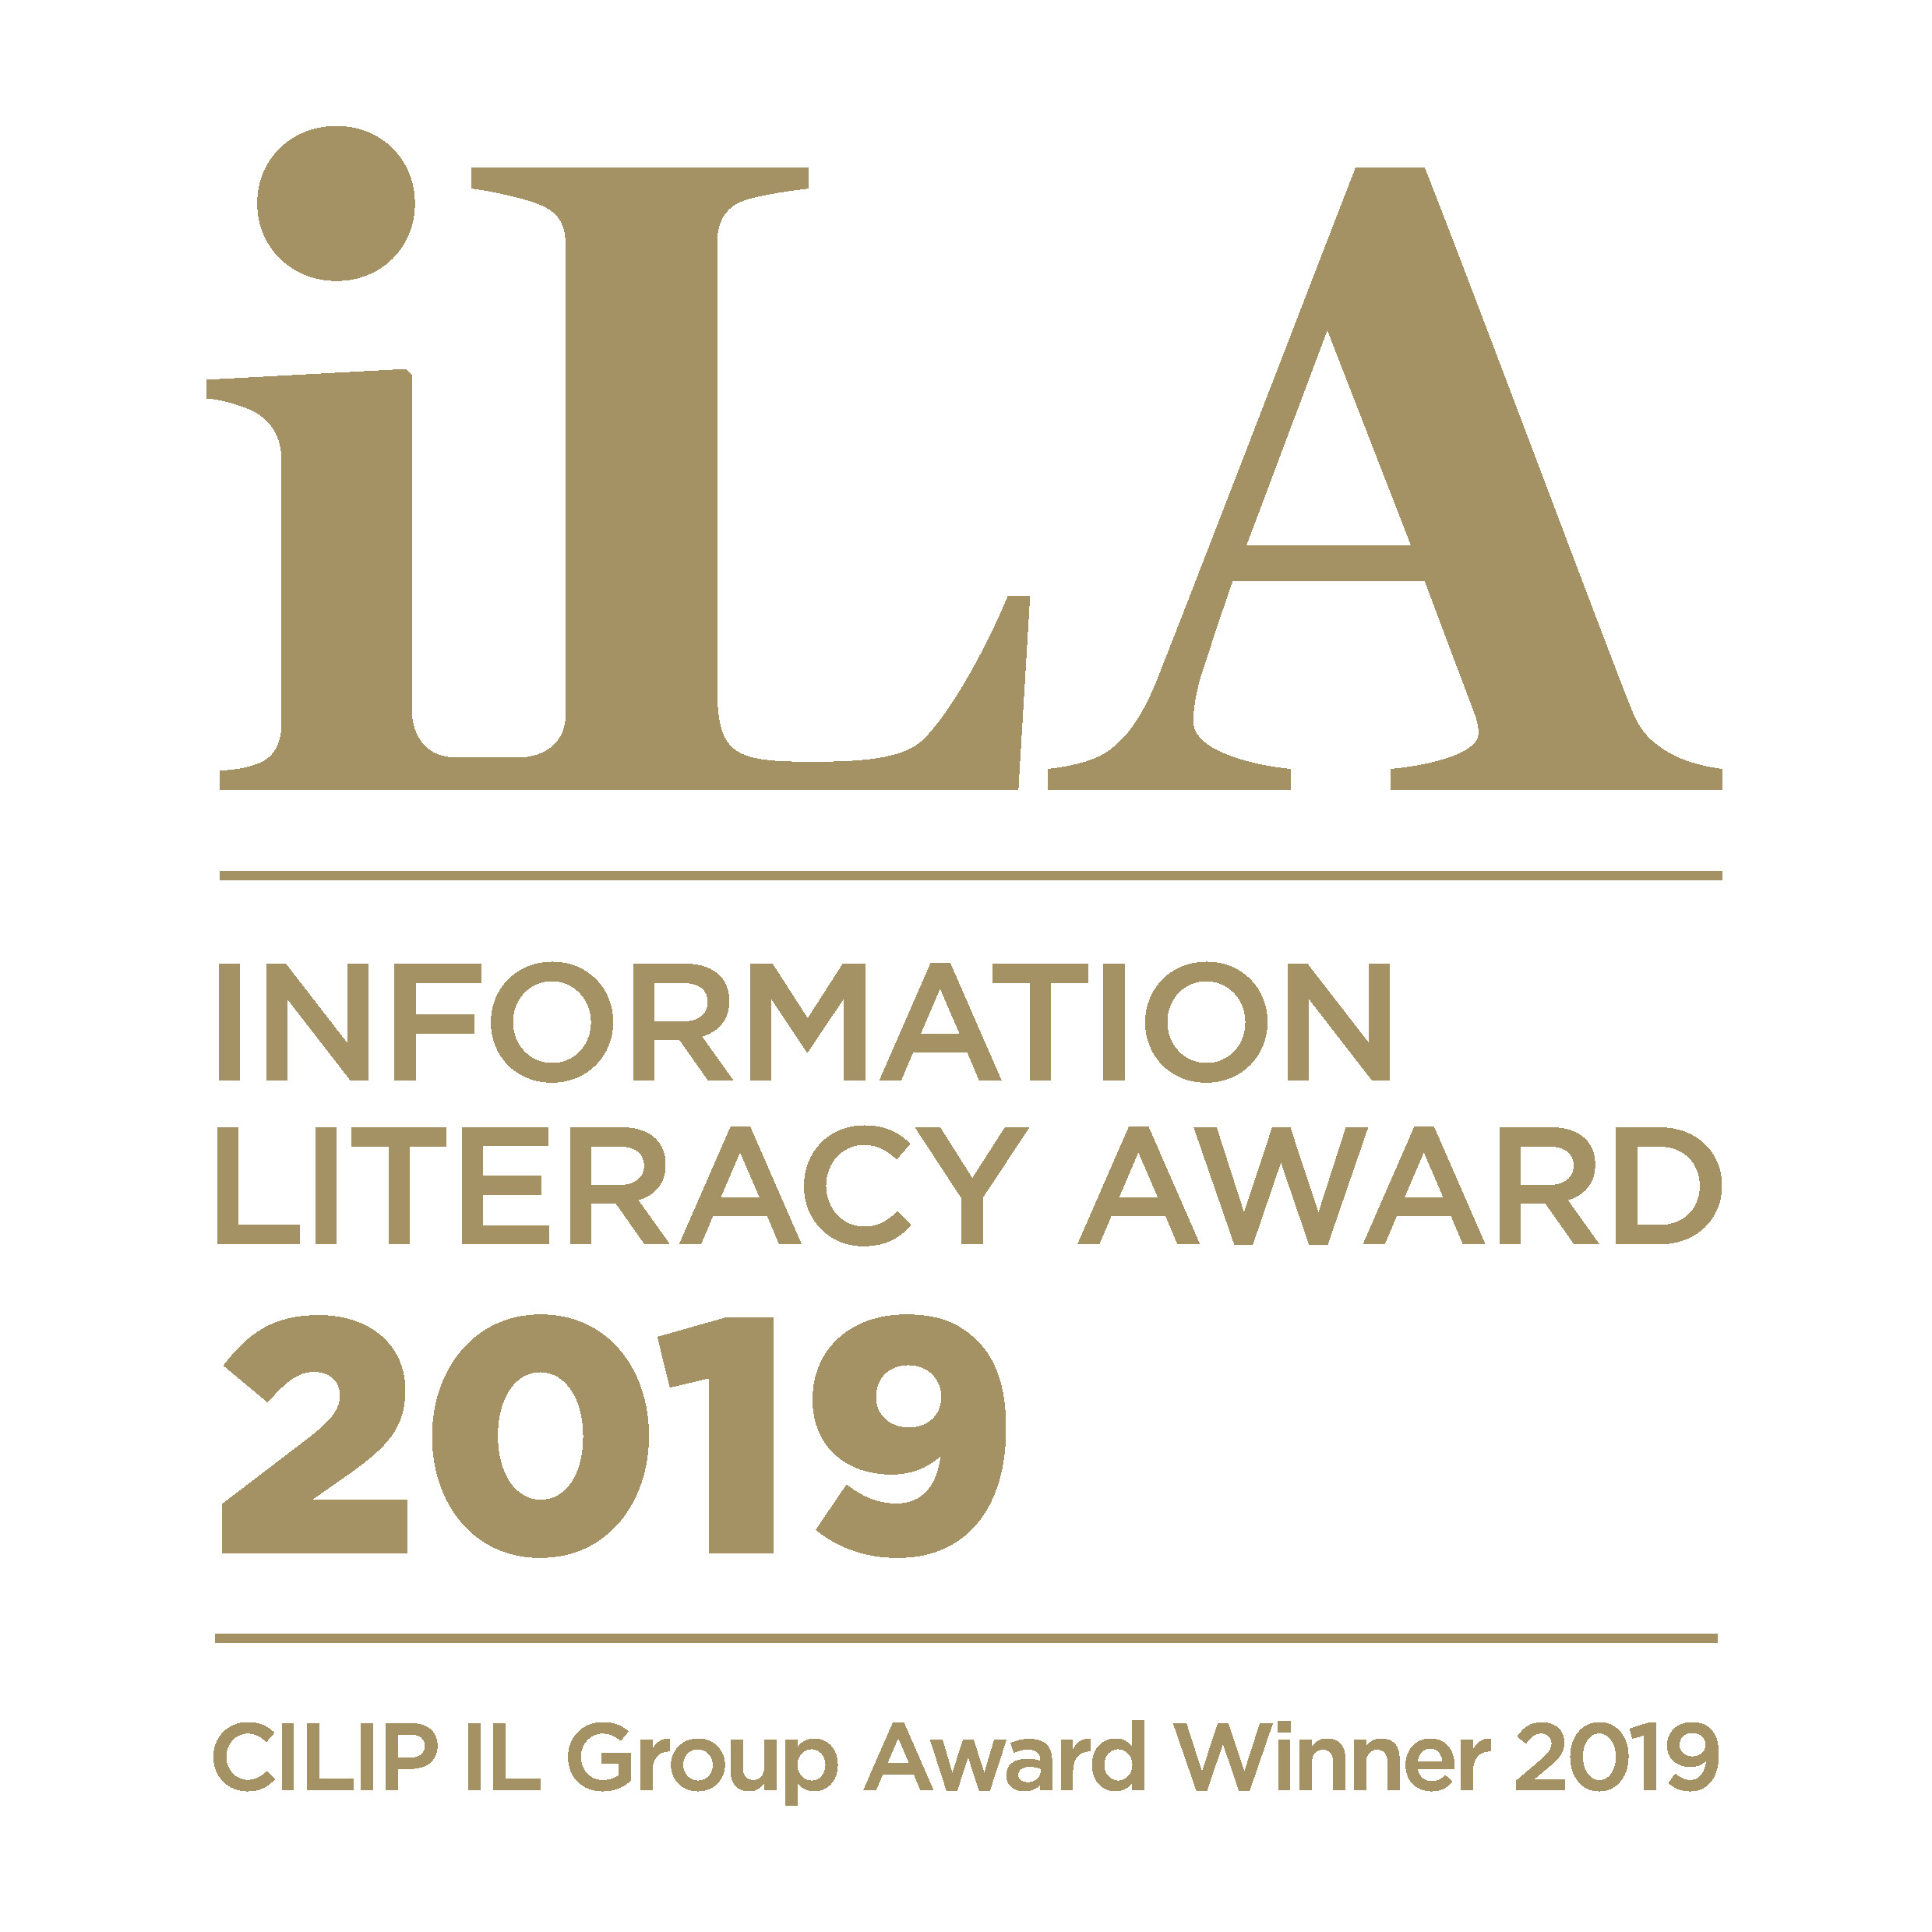 Information Literacy Award 2019 logo